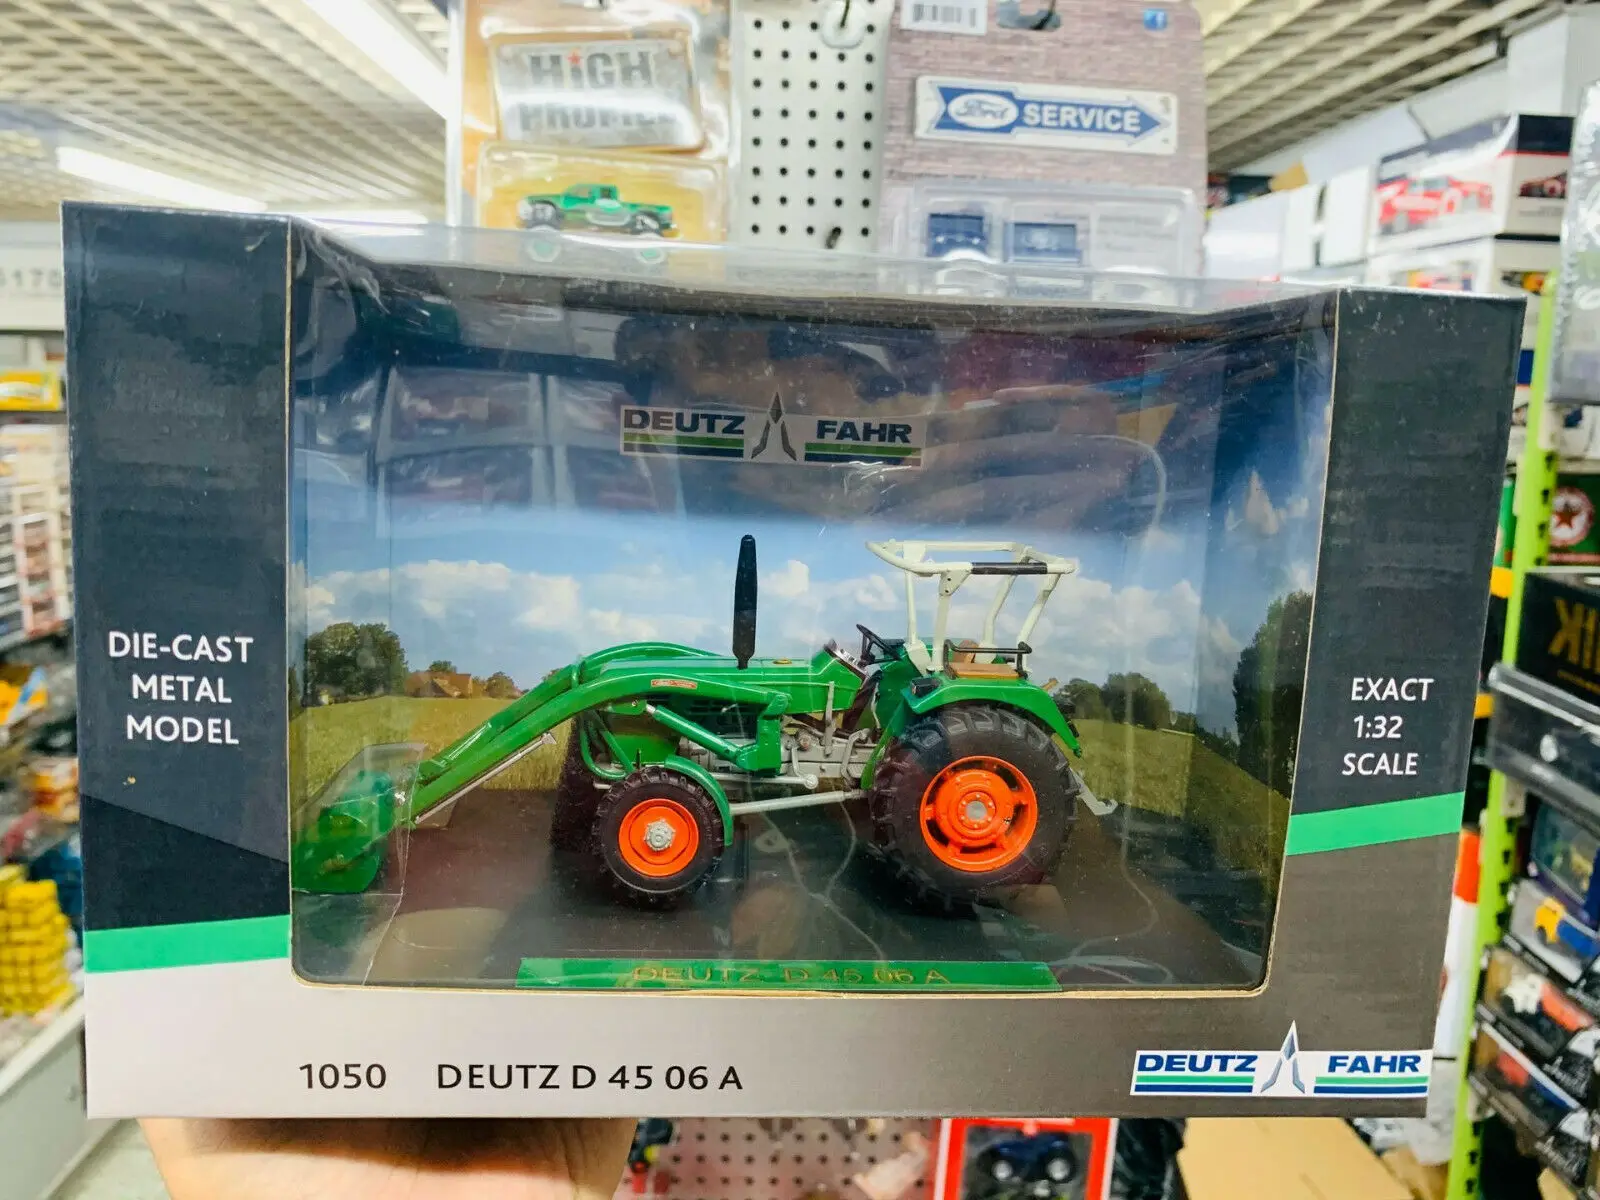 

Deutz-Fahr 1050 Deutz D 45 06 A Tractor Farm 1:32 Scale DieCast Model New in Box